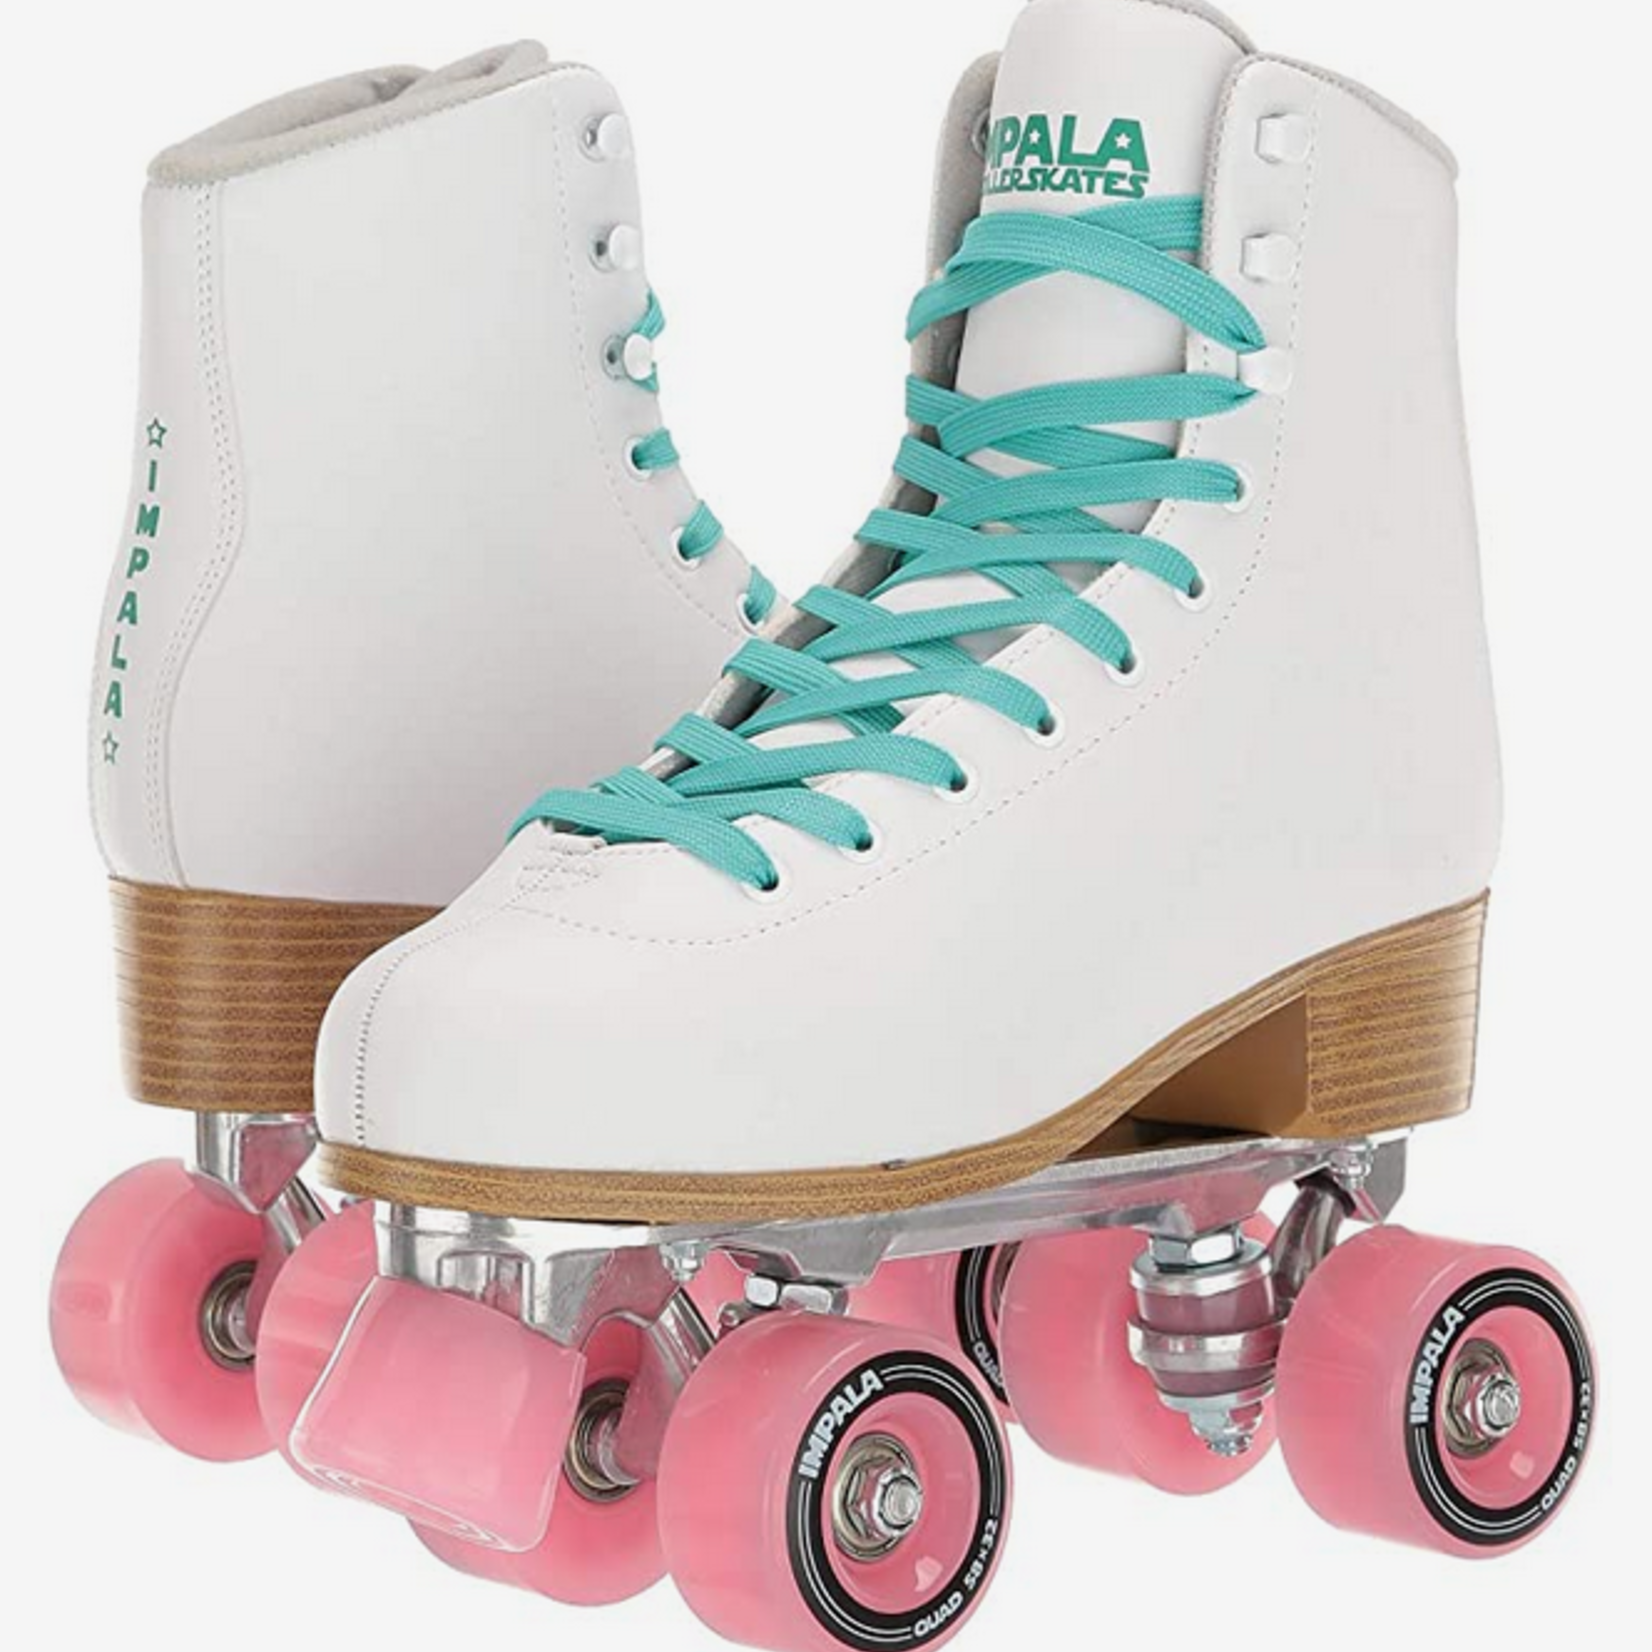 IMPALA Impala Quad Roller Skates (Women's)